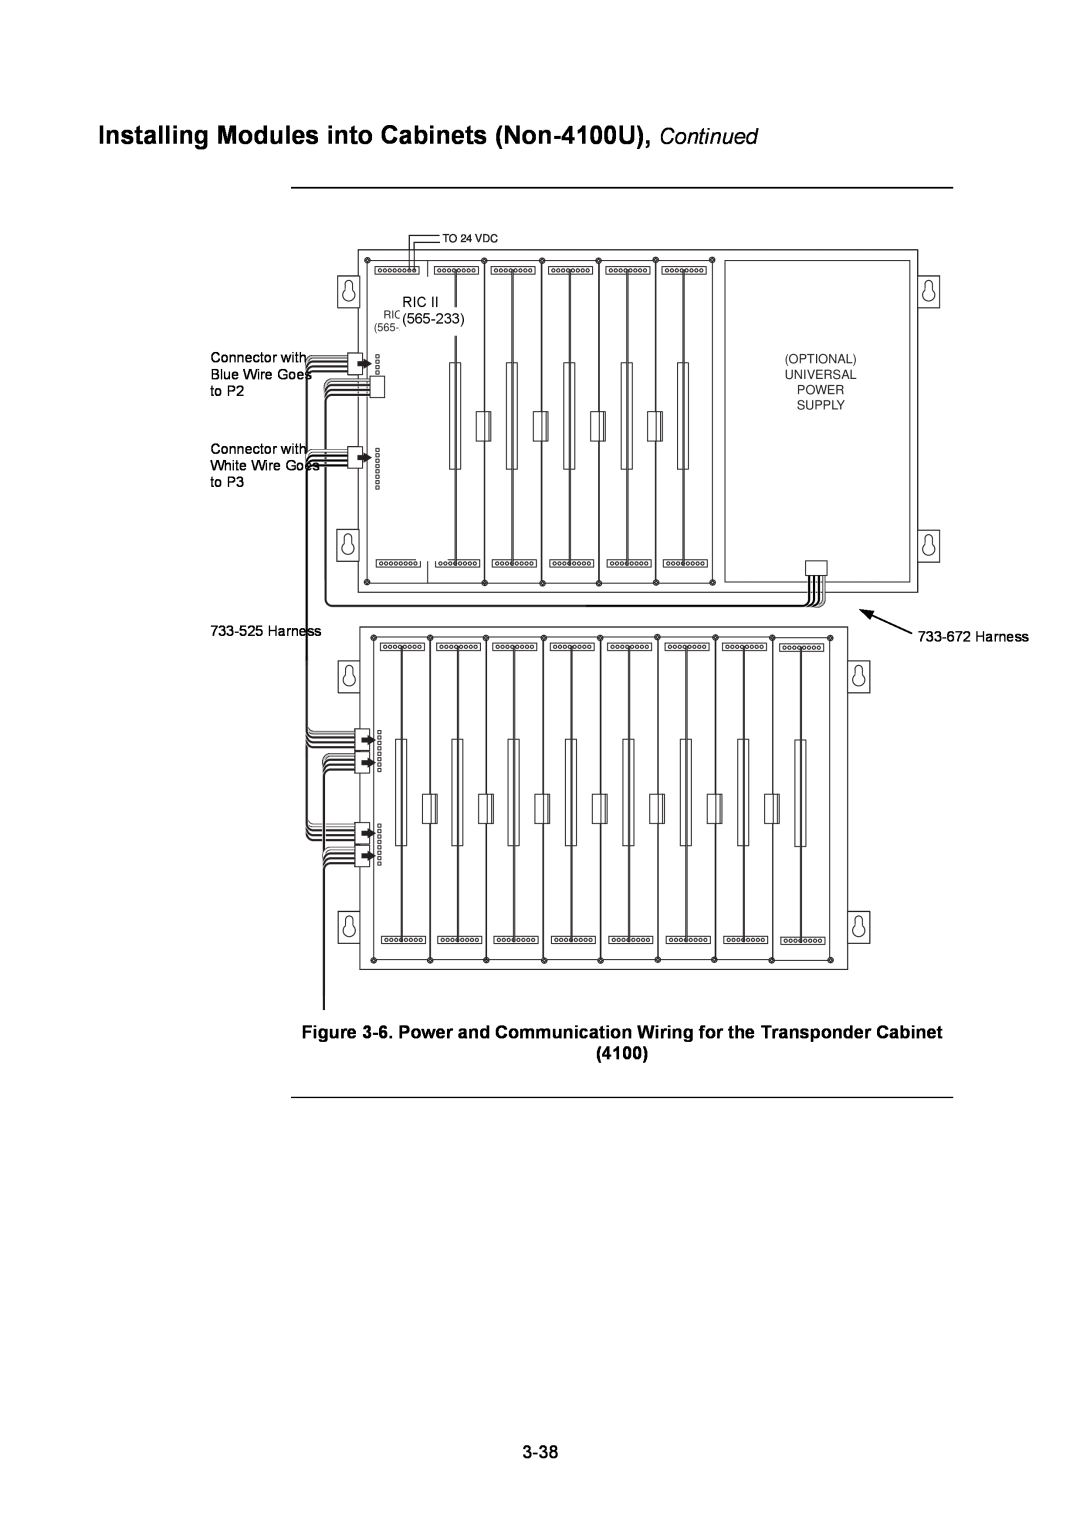 Tyco 4100U installation manual 565-233, 733-672Harness, Optional, Universal, Power, TO 24 VDC, Supply 